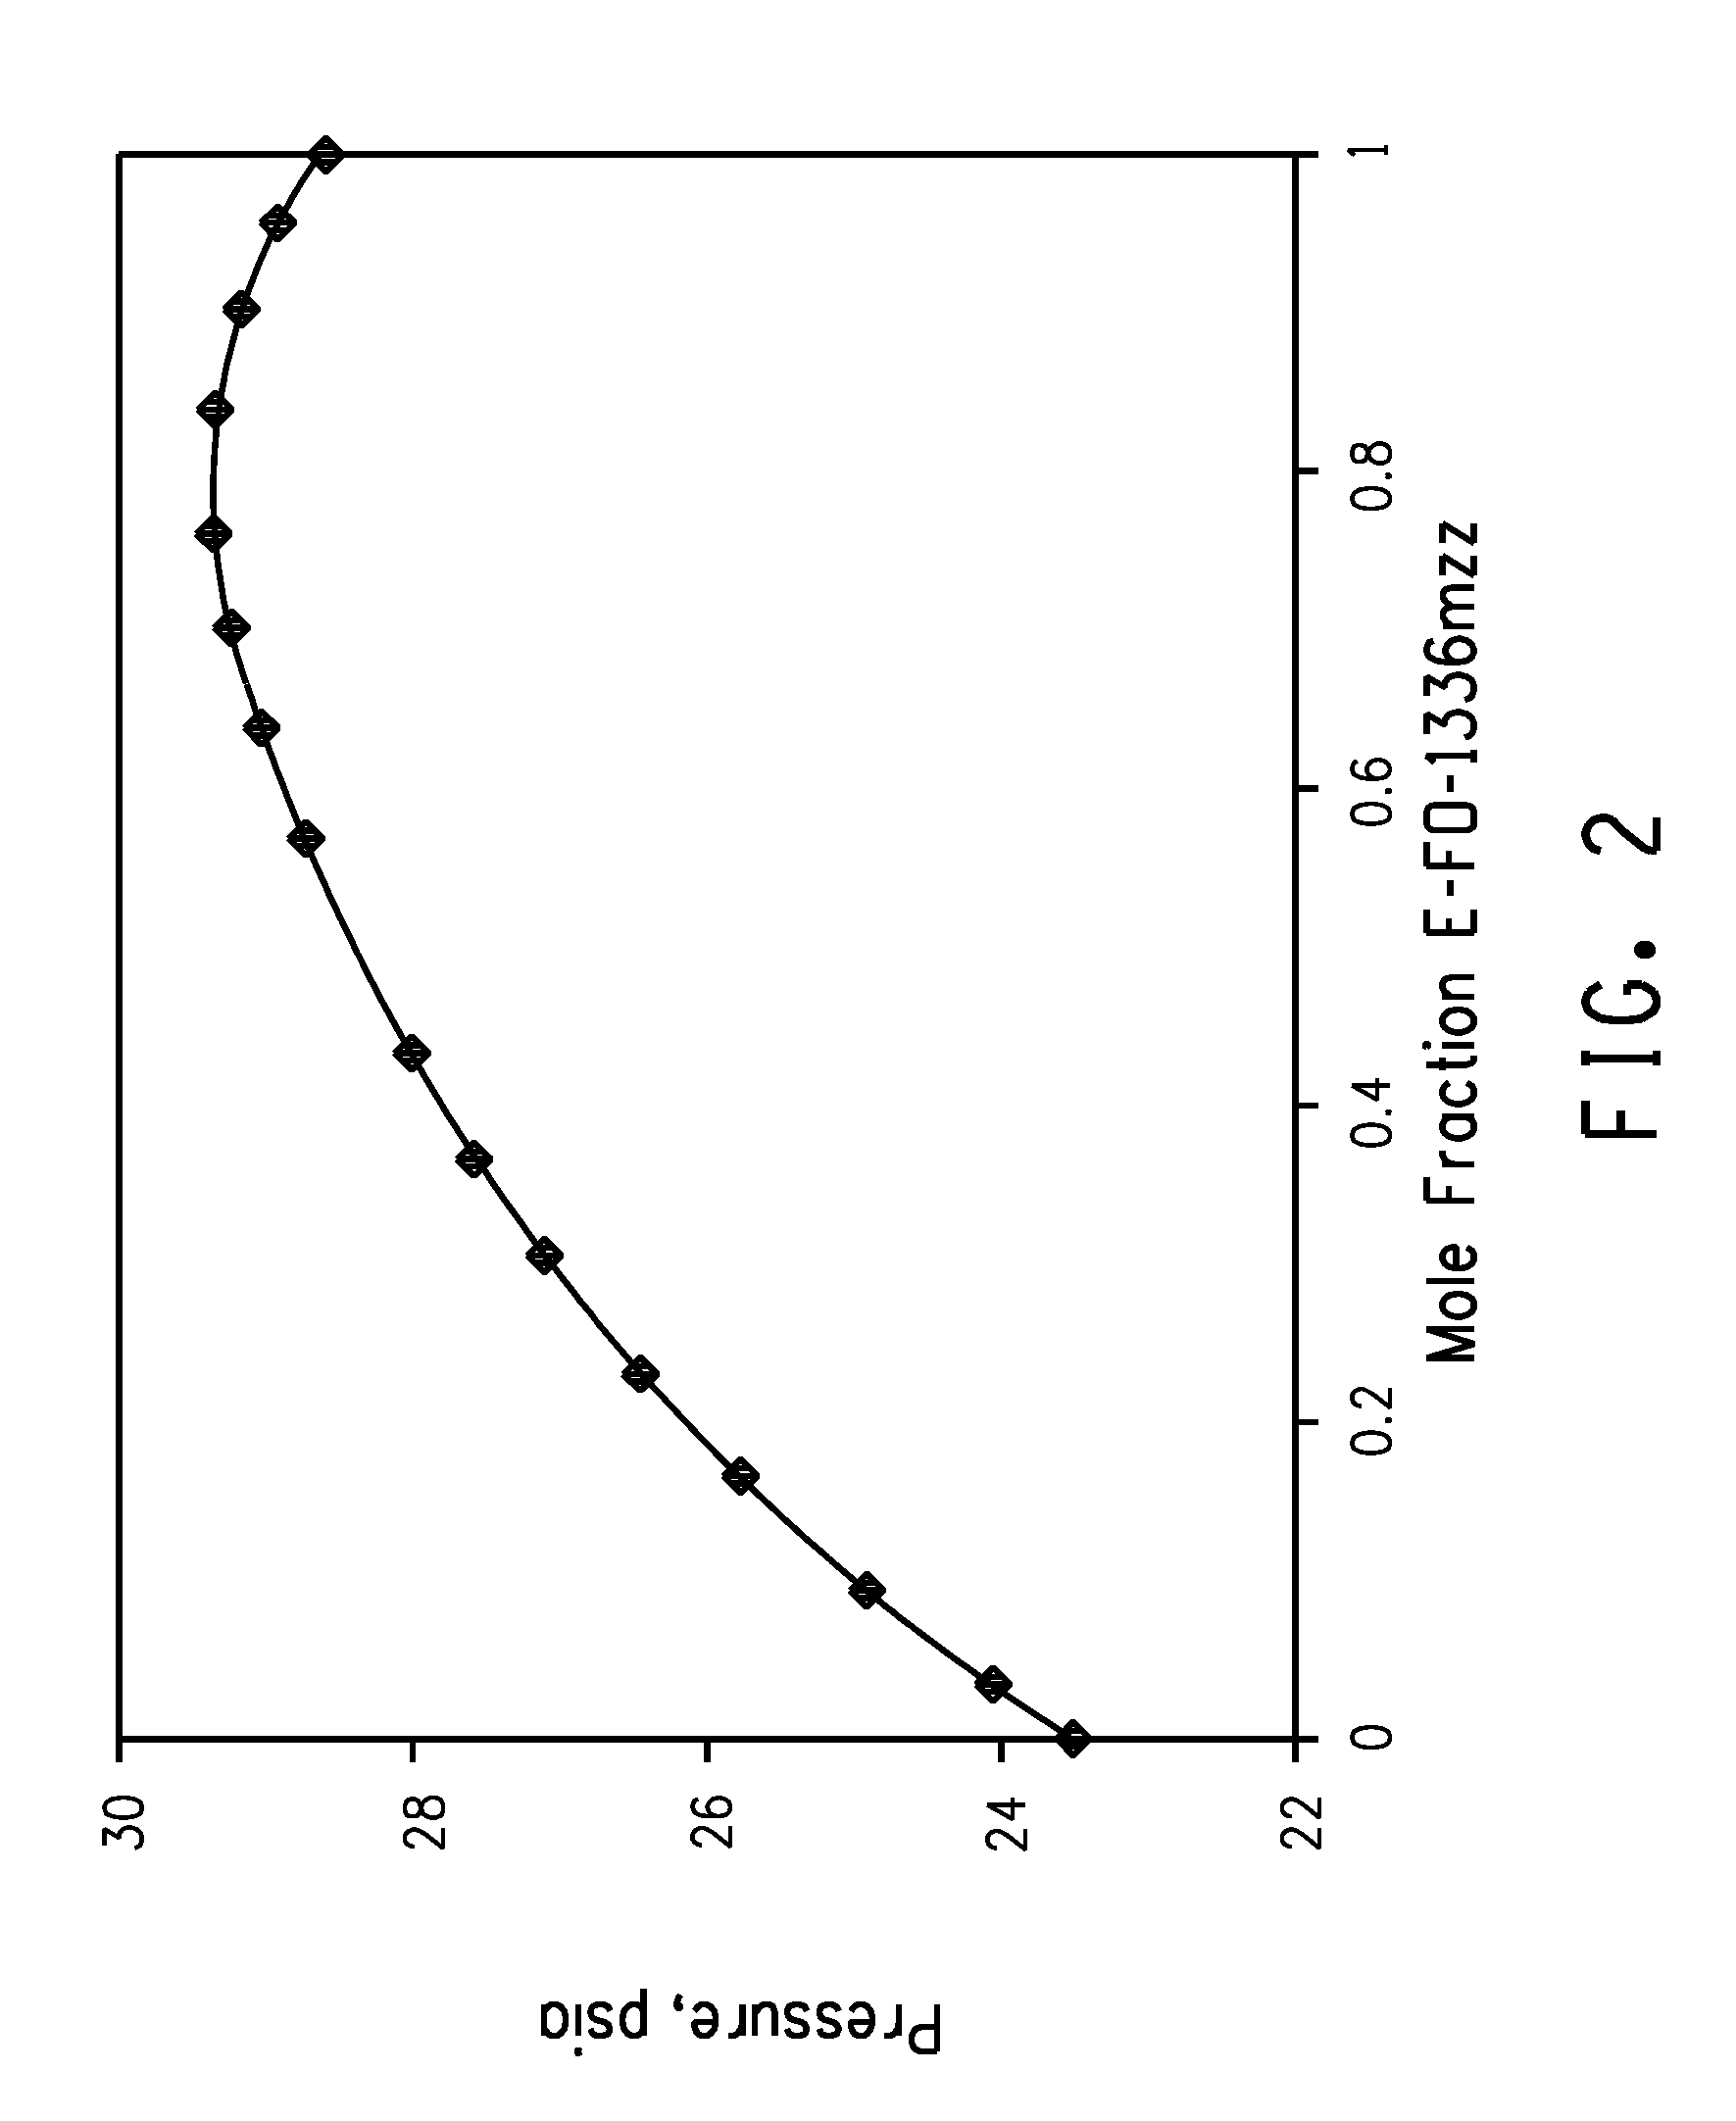 Azeotrope-like compositions of e-1,1,1,4,4,4-hexafluoro-2-butene and 1-chloro-3,3,3-trifluoropropene